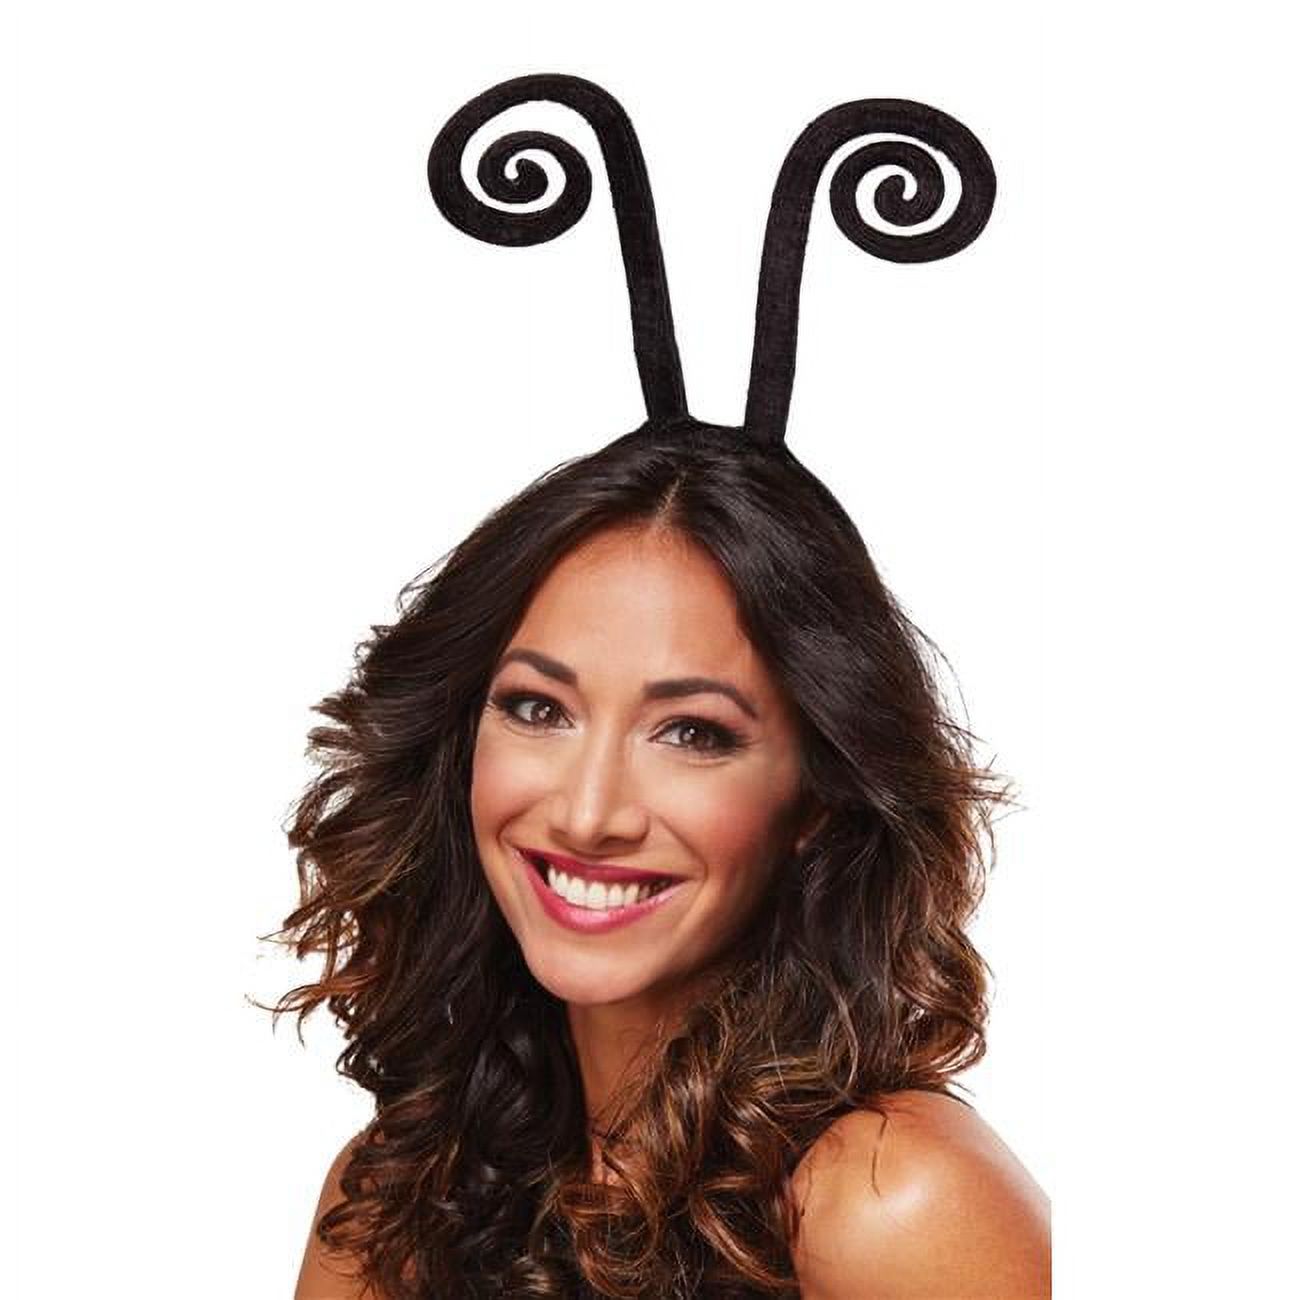 Mario Chiodo Antenna Headband Halloween Costume Accessory - Walmart.com